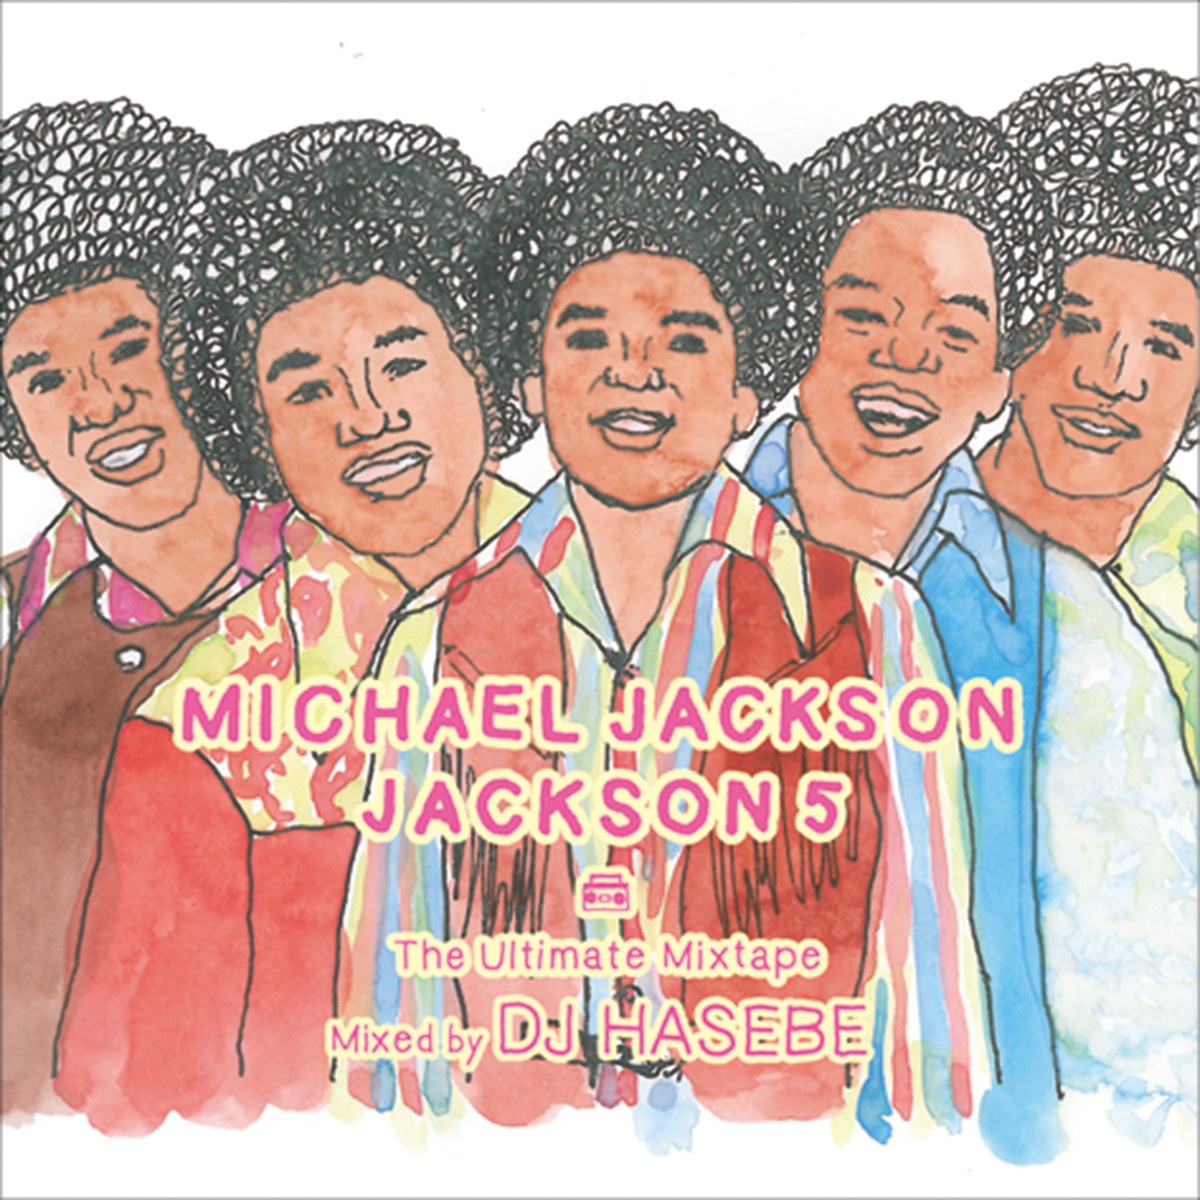 Michael Jackson / Jackson 5 (The Ultimate Mixtape)